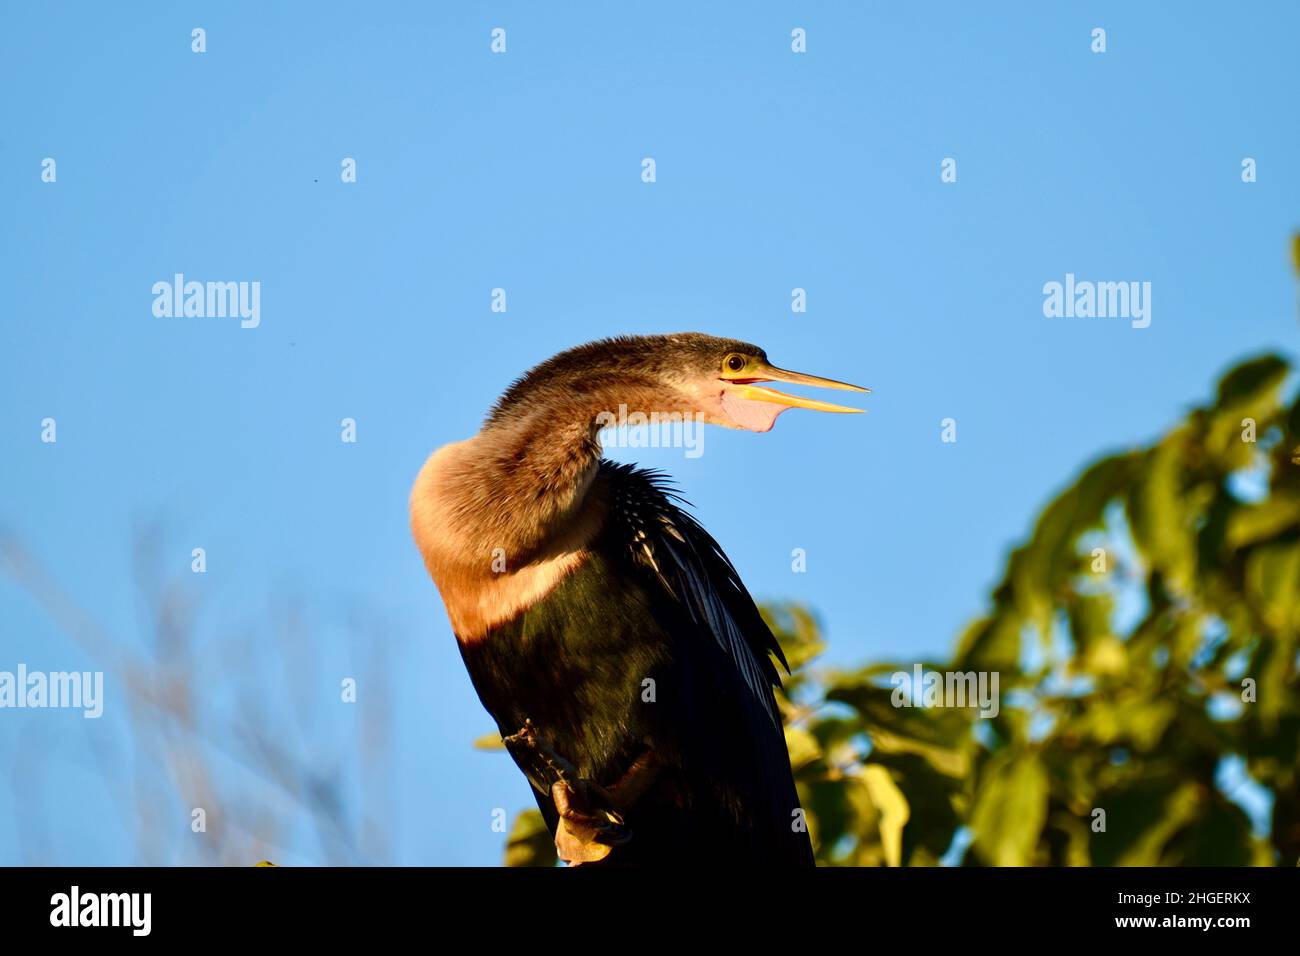 Anhinga (Anhinga anhinga), aka snakebird, American darter, or water turkey, with its throat sac clearly visible, in the mangrove of San Pedro, Belize. Stock Photo